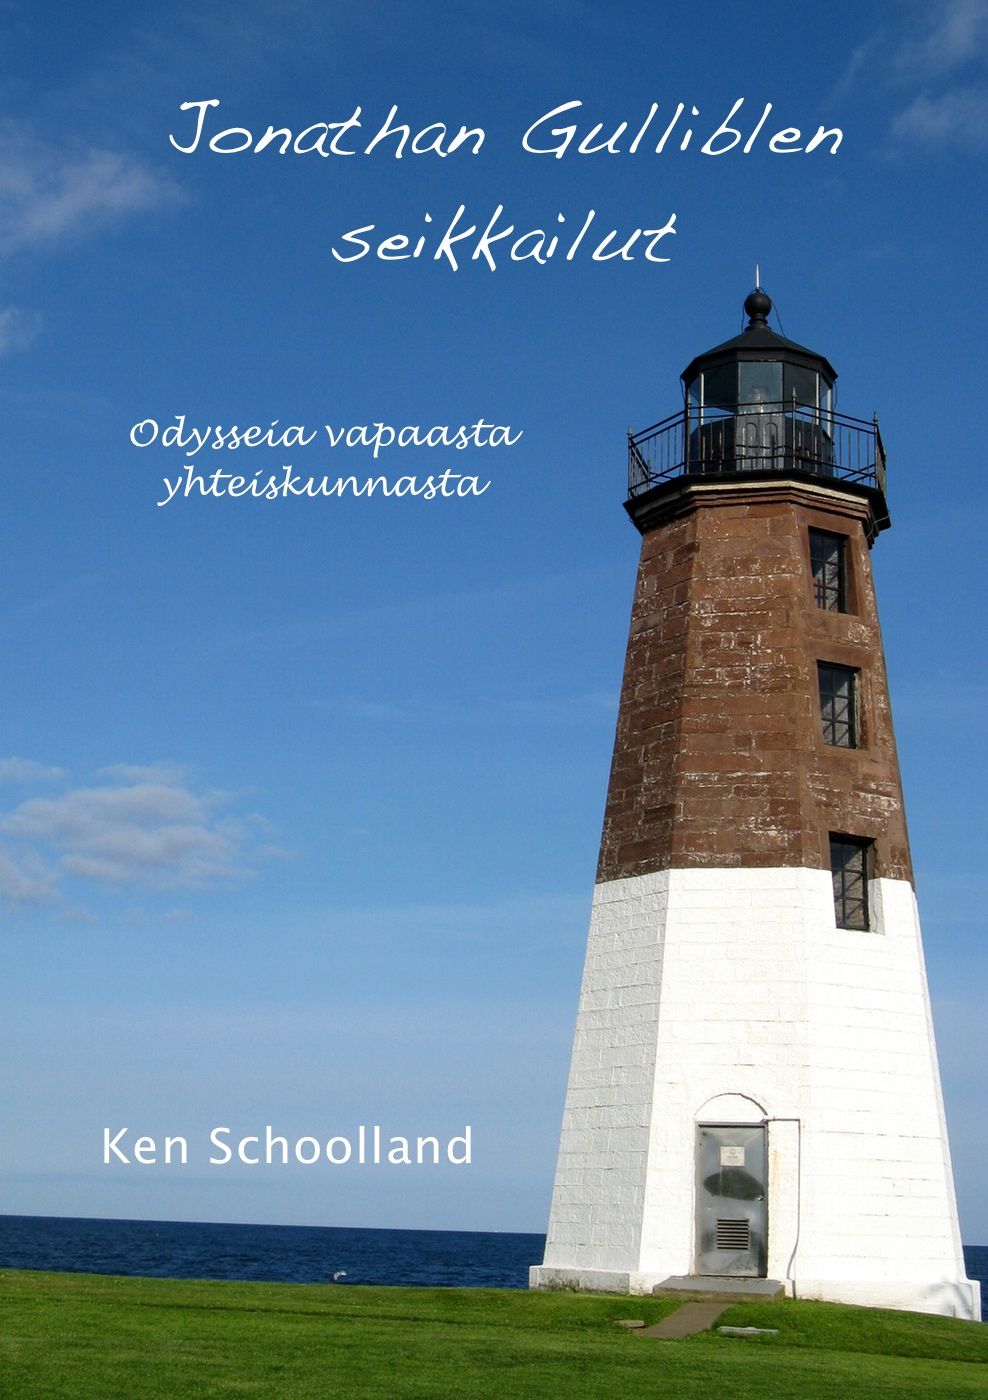 Jonathan Gulliblen seikkailut, eBook by Ken Schoolland